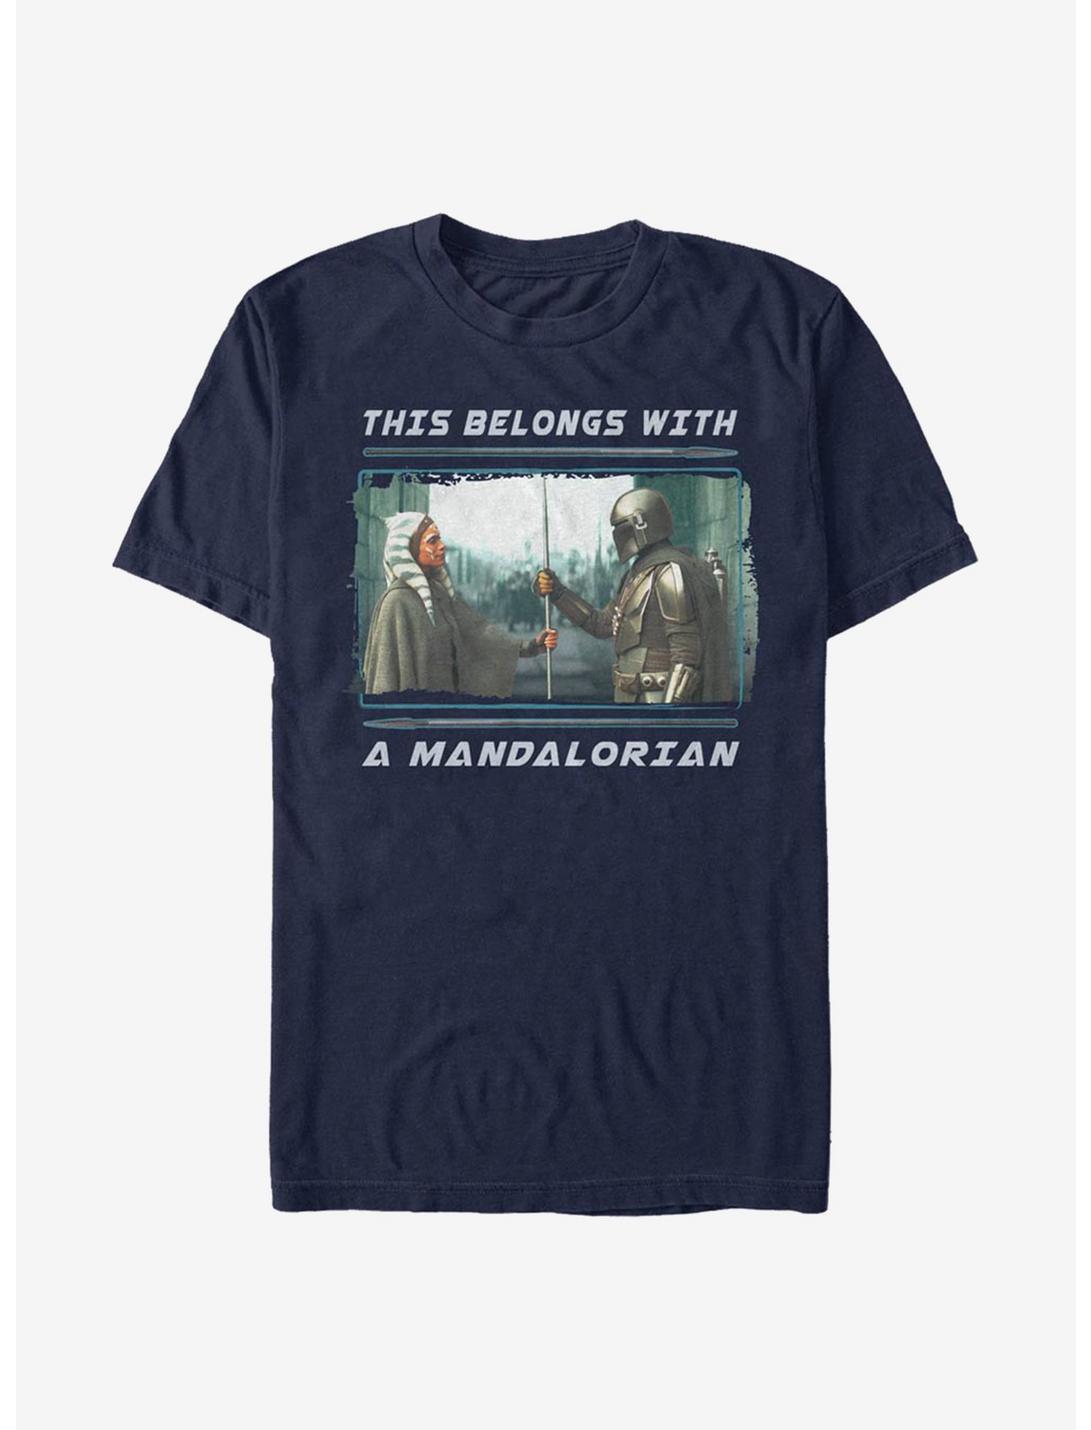 Star Wars The Mandalorian Belongs With A Mandalorian T-Shirt, NAVY, hi-res